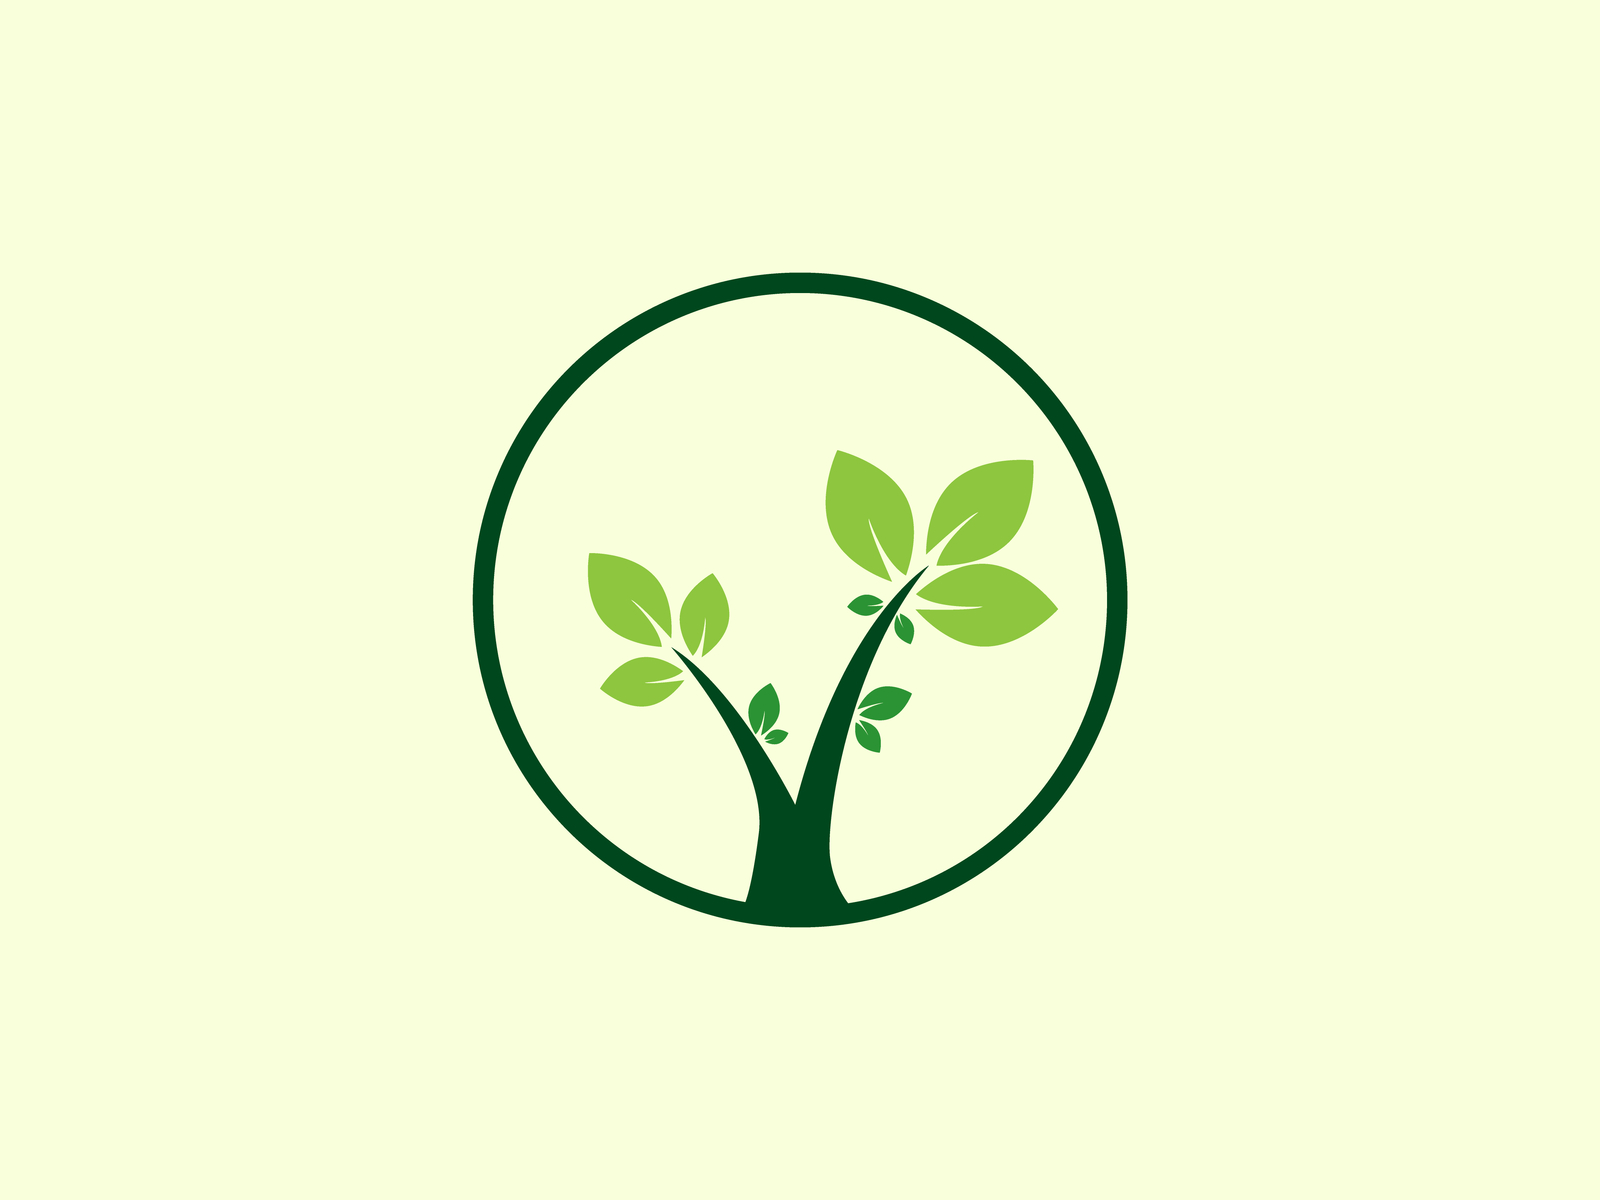  Tree Logo  by Artha Wirawan on Dribbble